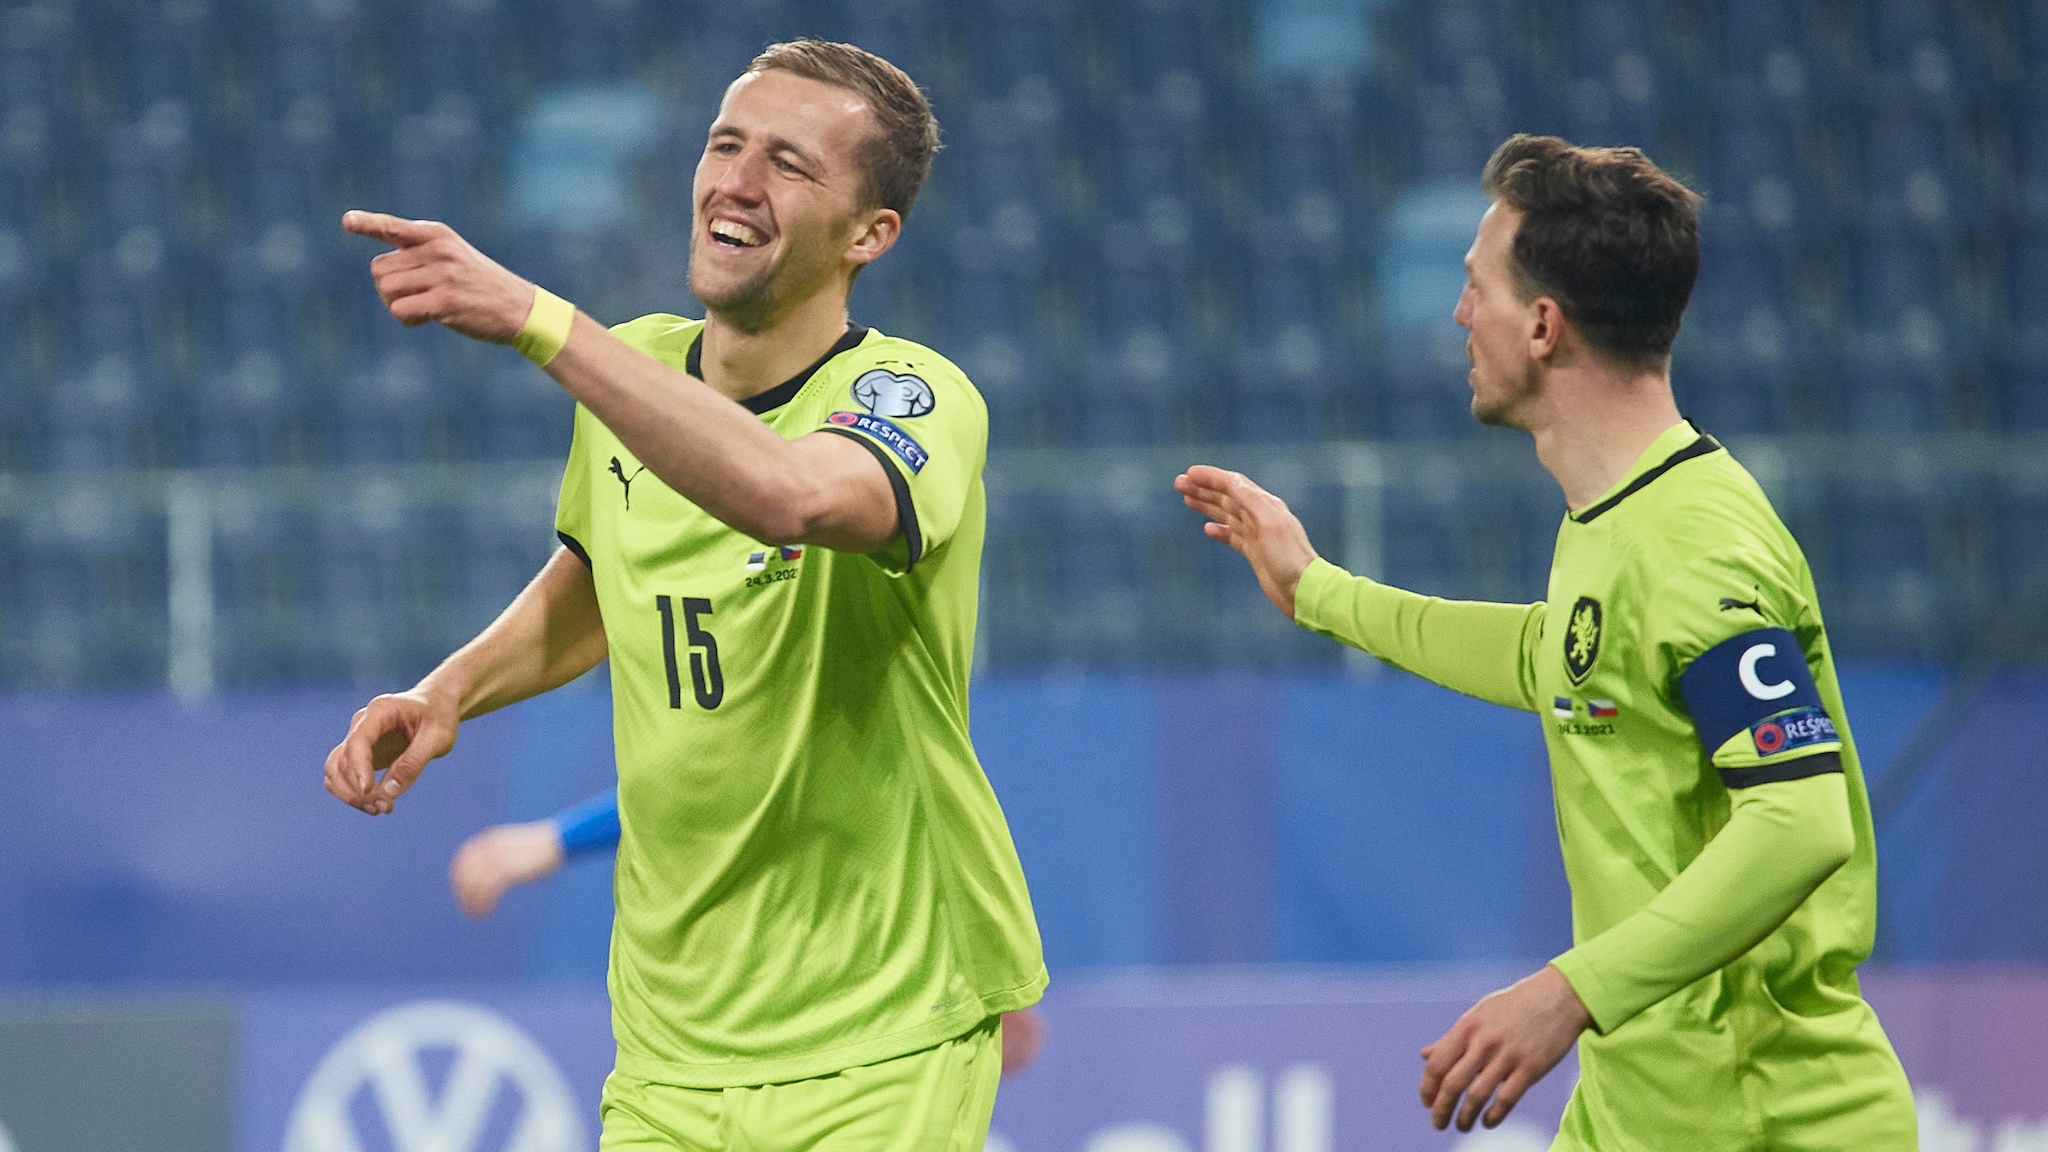 Highlights: Estonia 2-6 Czech Republic (2 mins) | European Qualifiers | UEFA.com